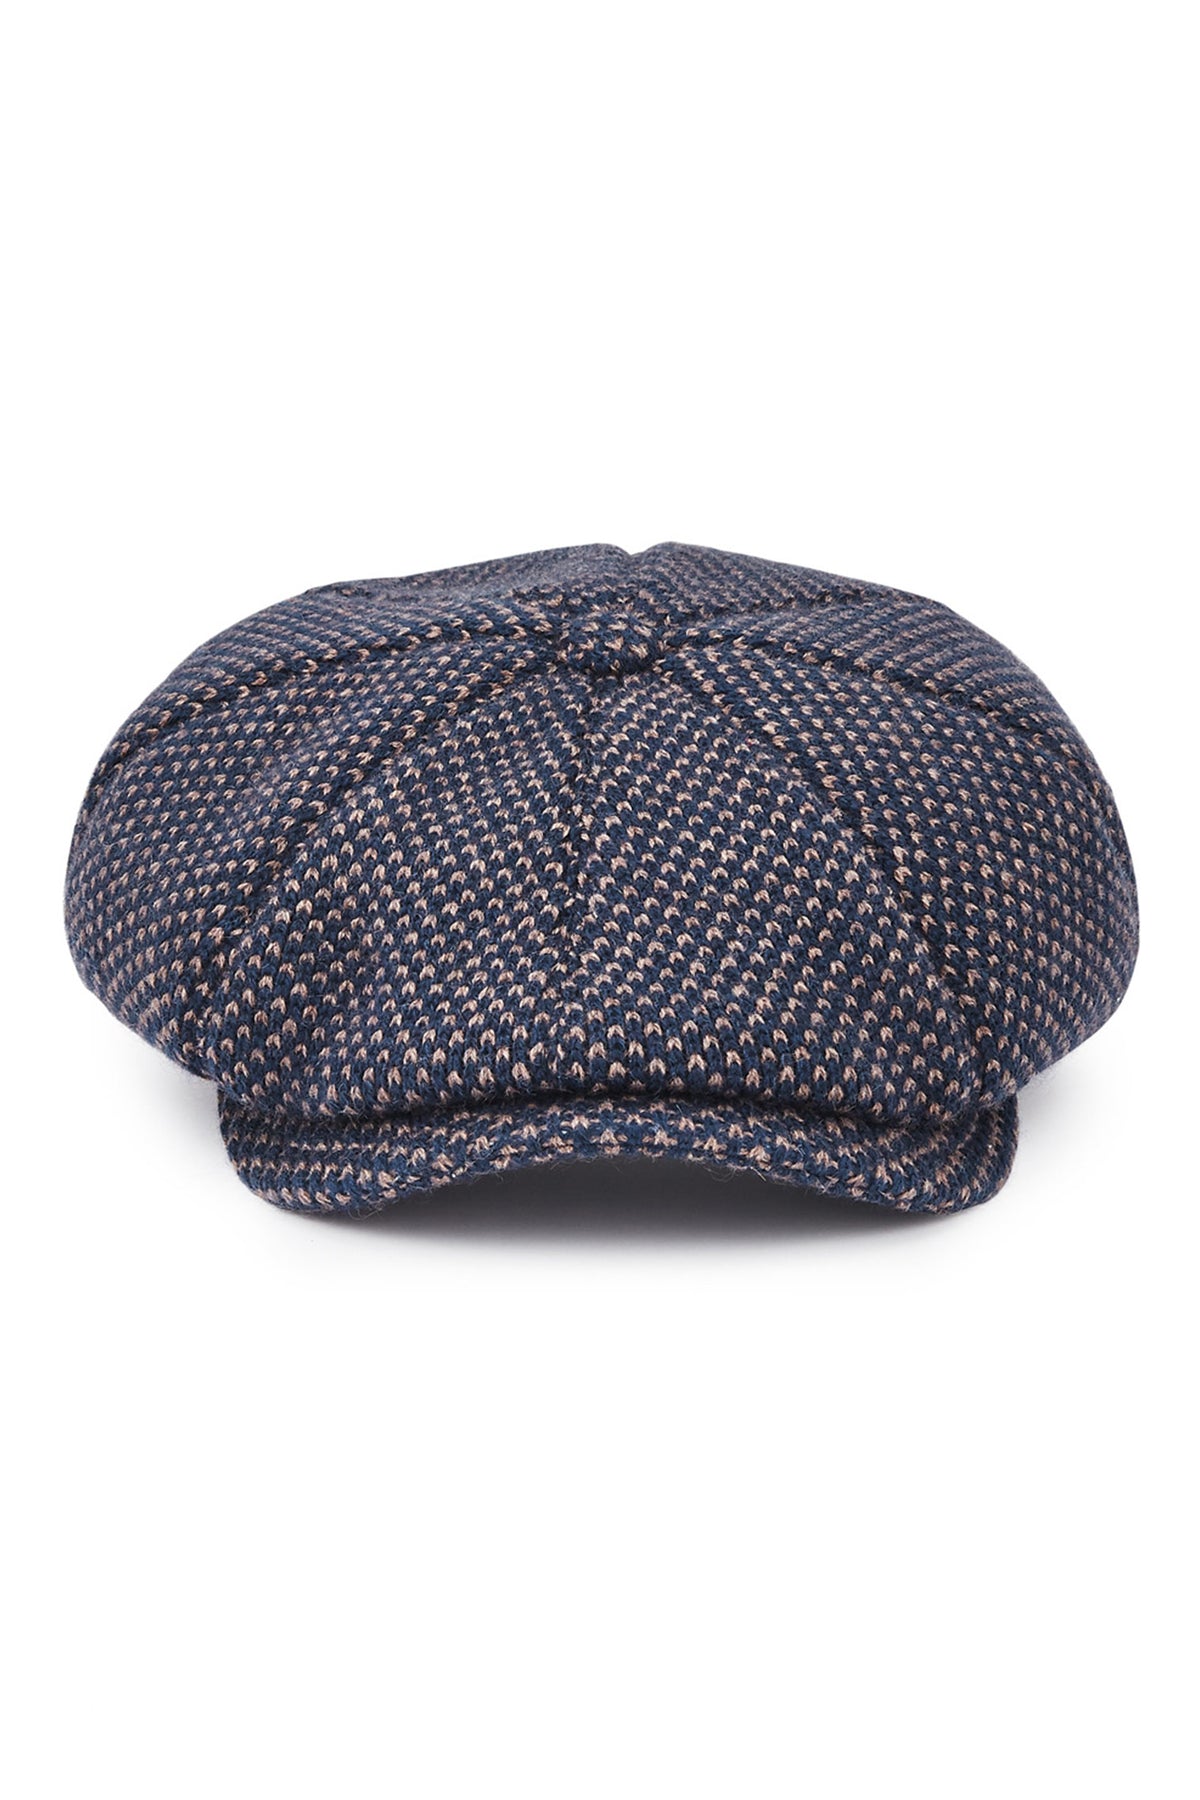 Whitebridge bakerboy cap - Lock & Co. Hats for Men & Women - Lock 